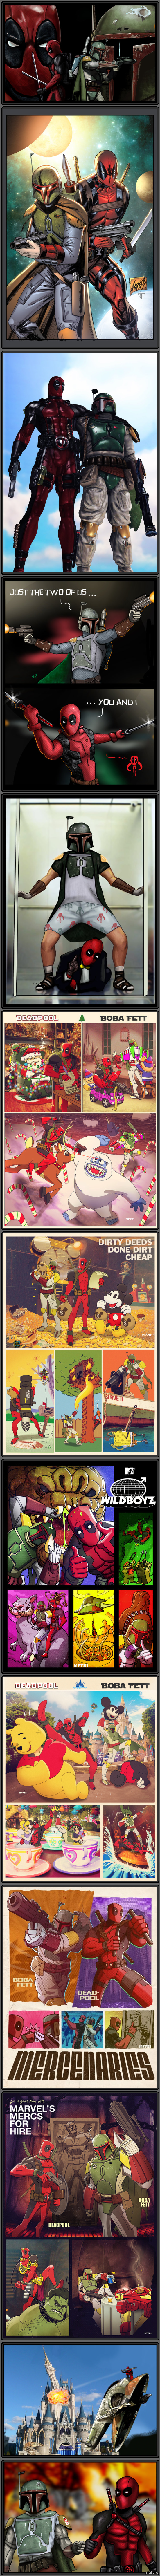 Crossover art - Deadpool &amp;amp; Boba Fett          -    .